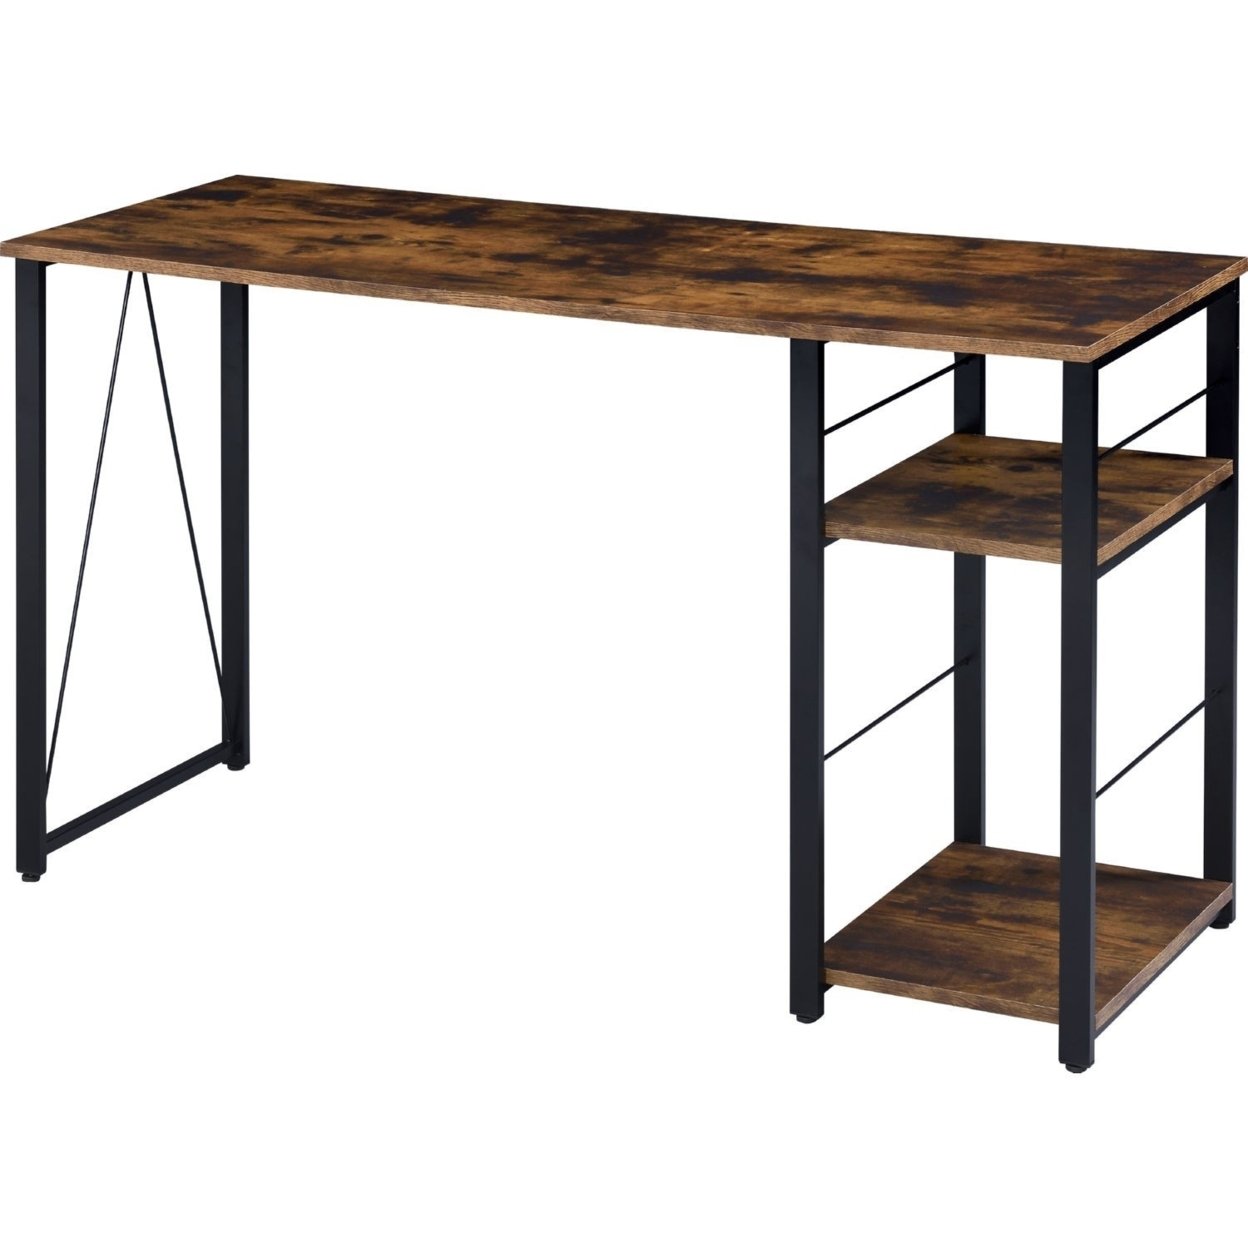 Writing Desk With 2 Tier Shelves And Tubular Metal Legs, Brown And Black- Saltoro Sherpi